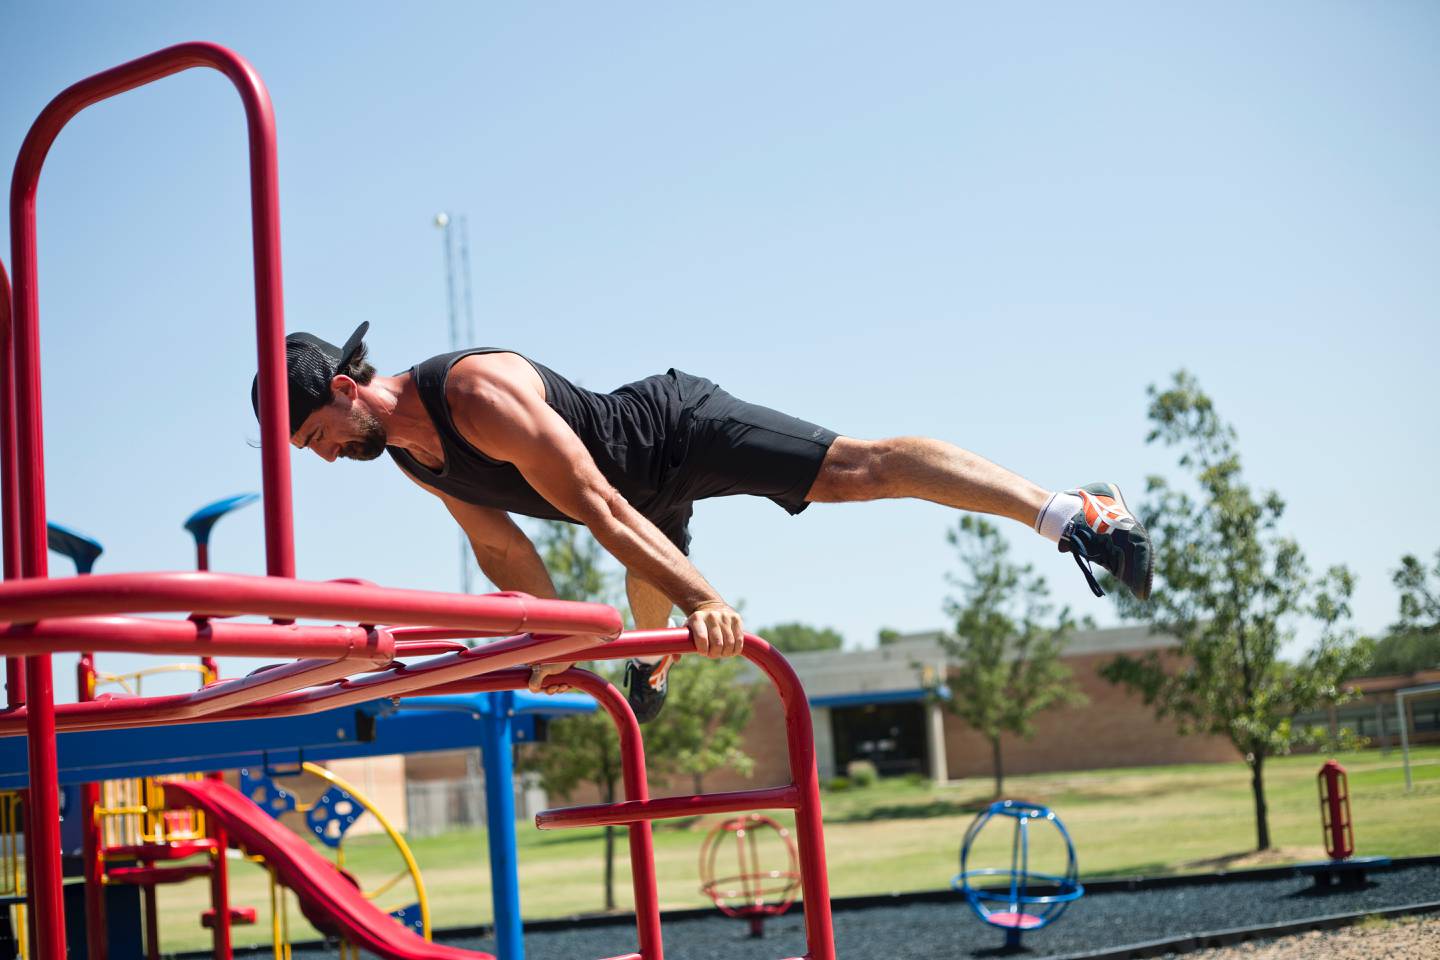 Gymnastics training improves mobility, strength, agility and posture. Photo: GMB Fitness / Unsplash